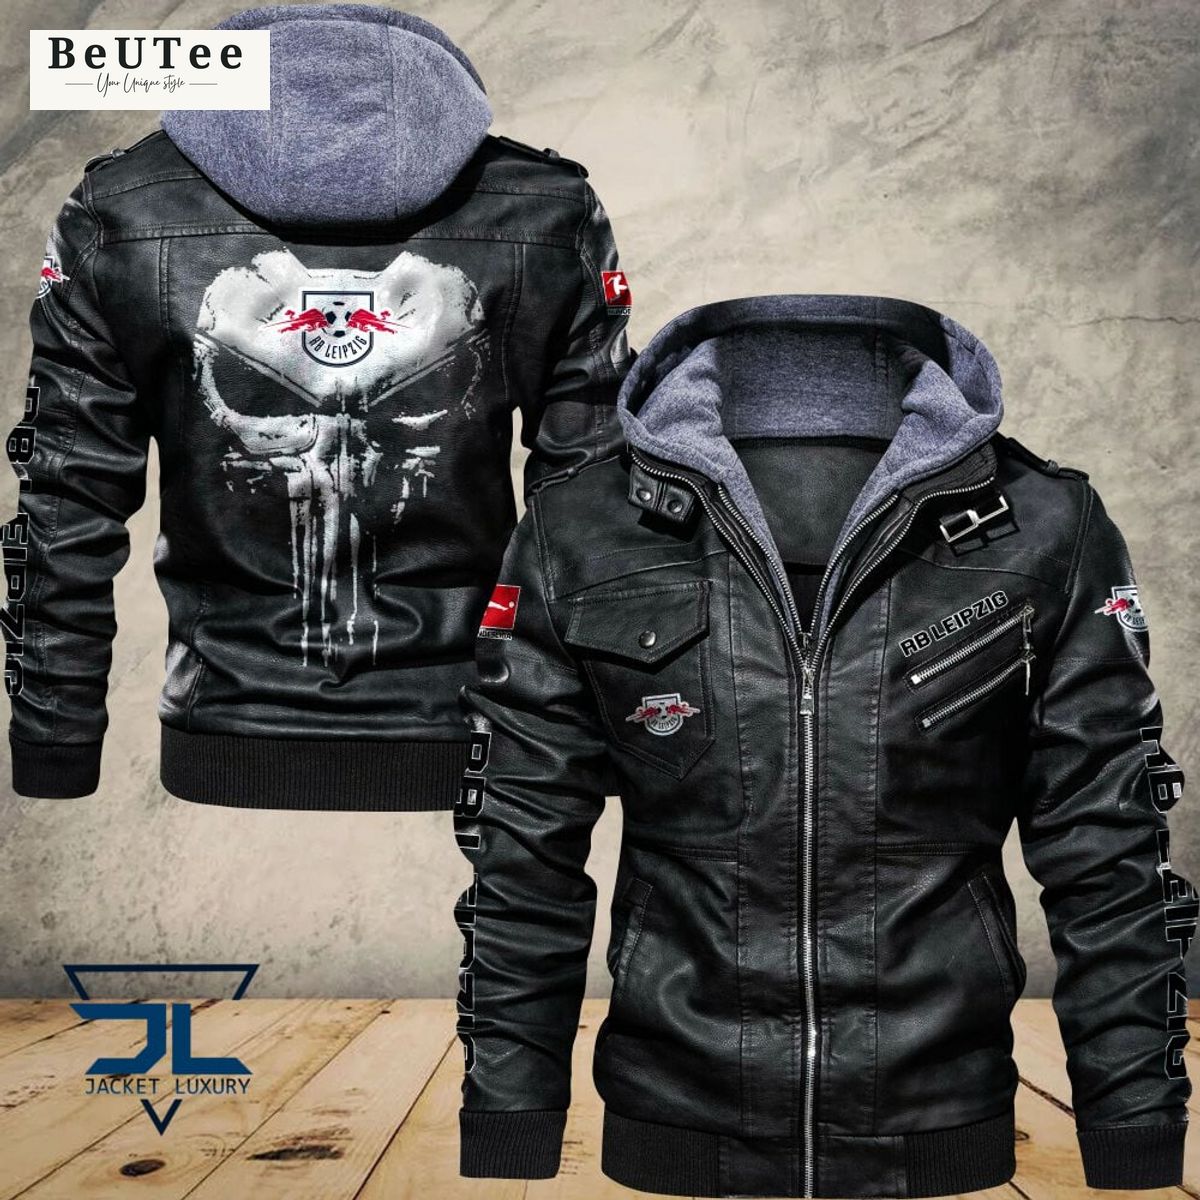 rb leipzig bundesliga germany league 2d leather jacket 1 alIgH